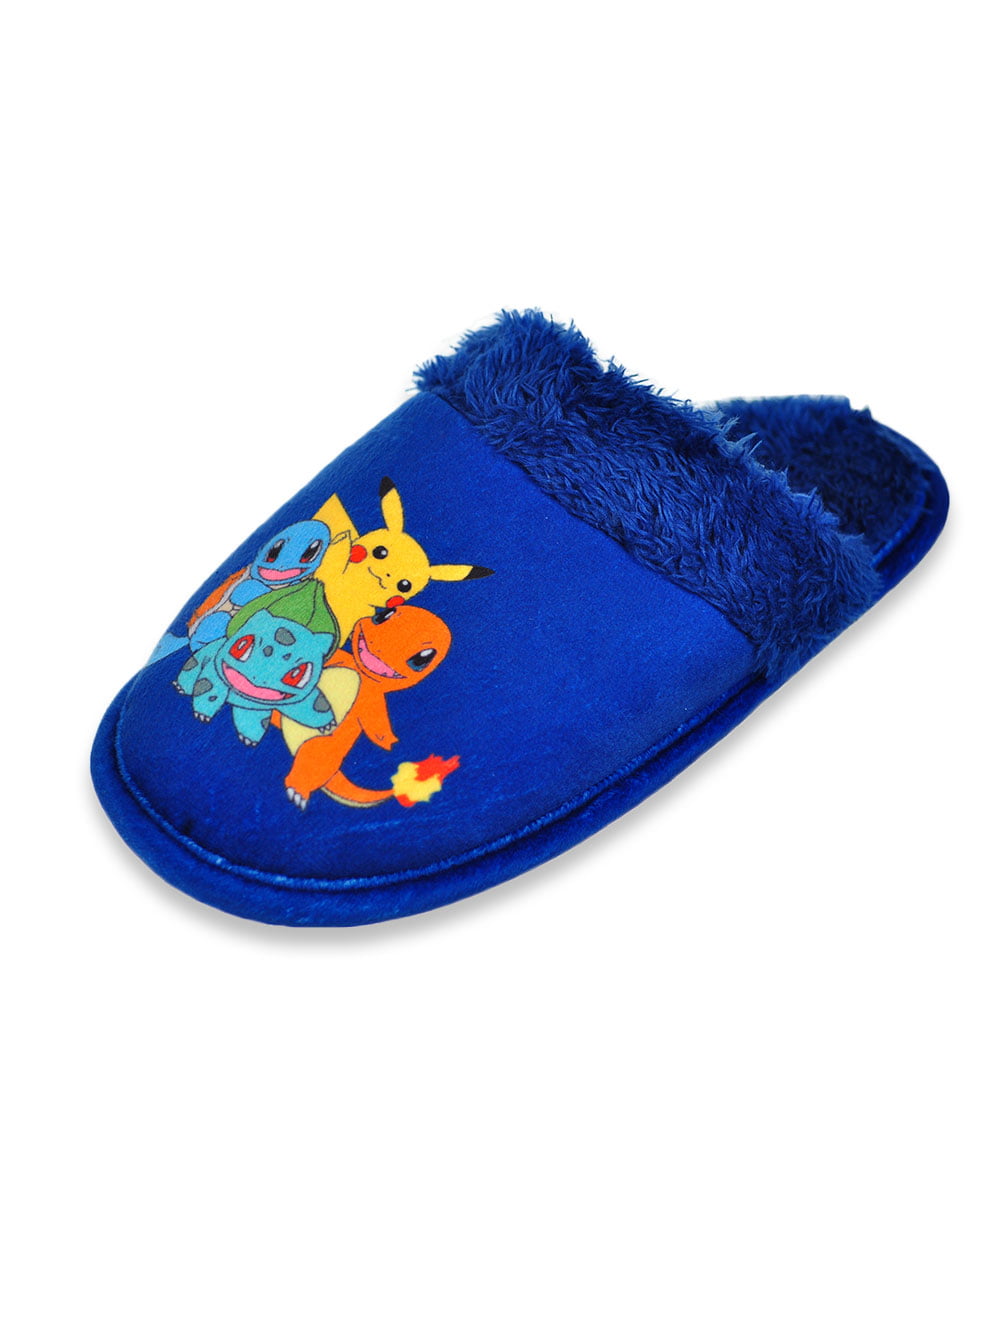 Pokemon Pikachu Boys Slippers